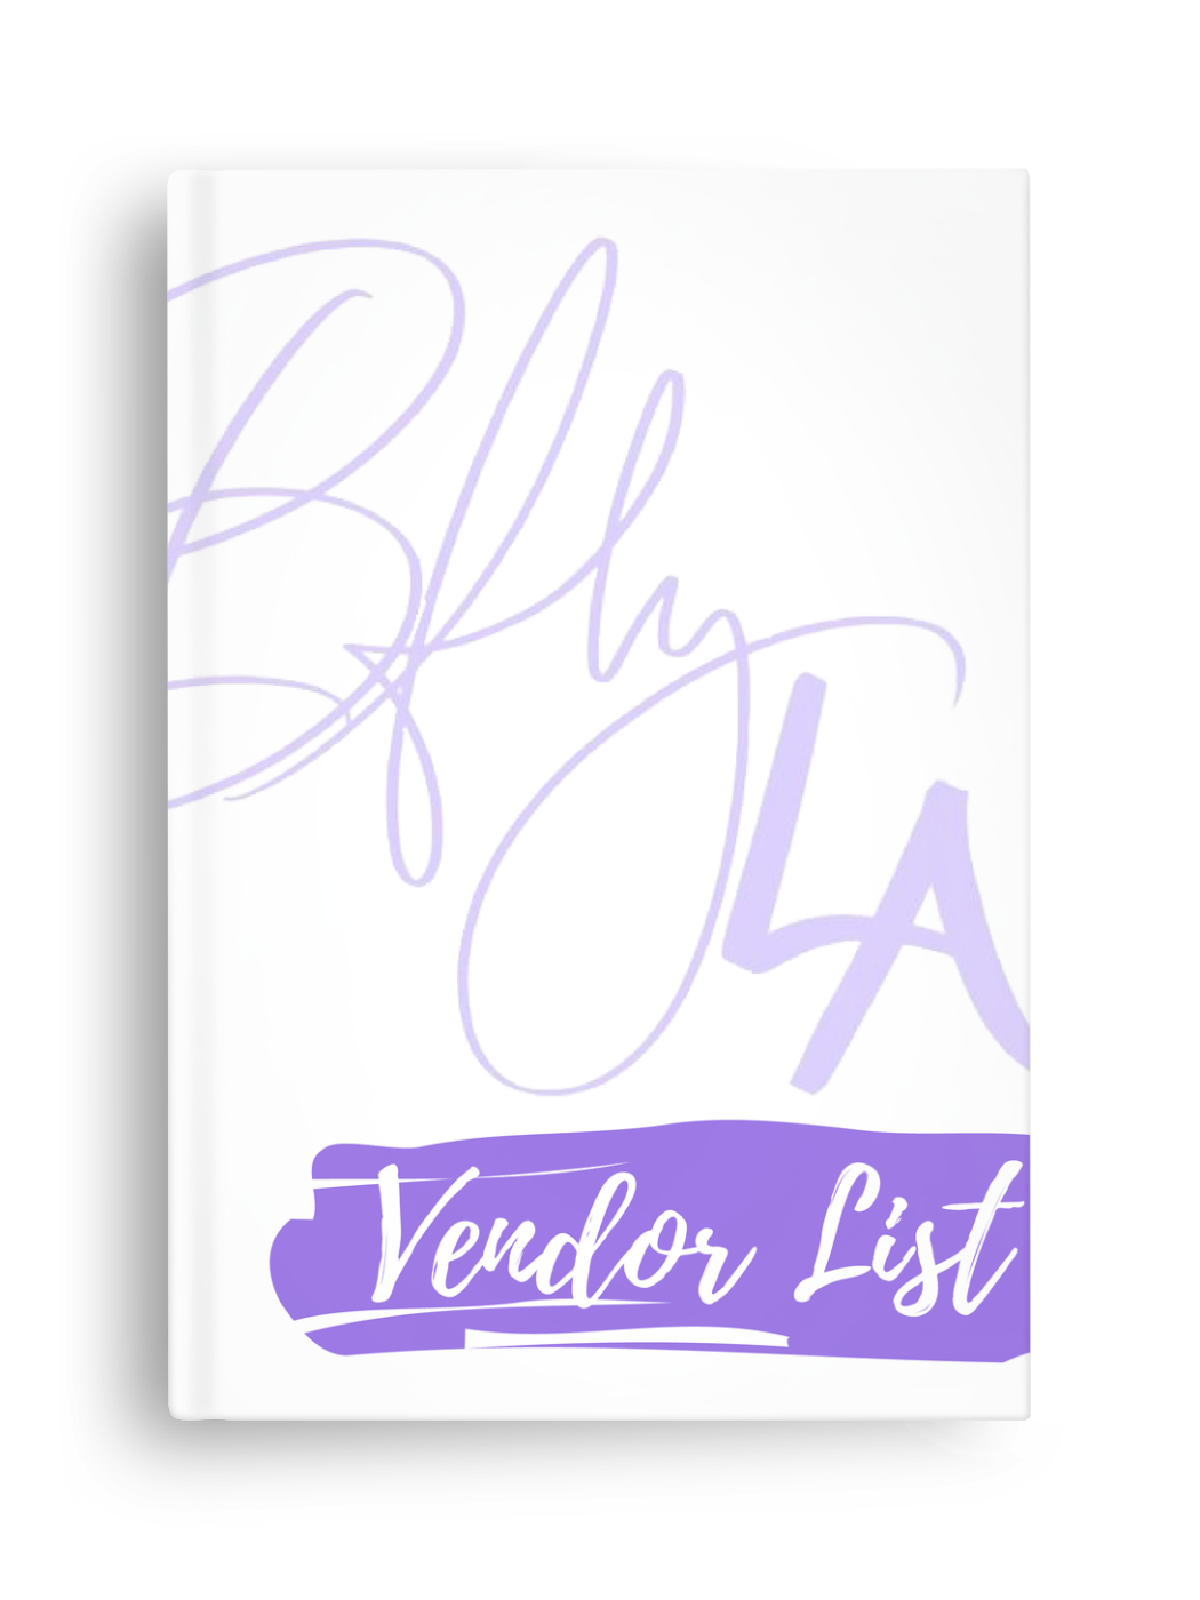 BFly LA Vendor List